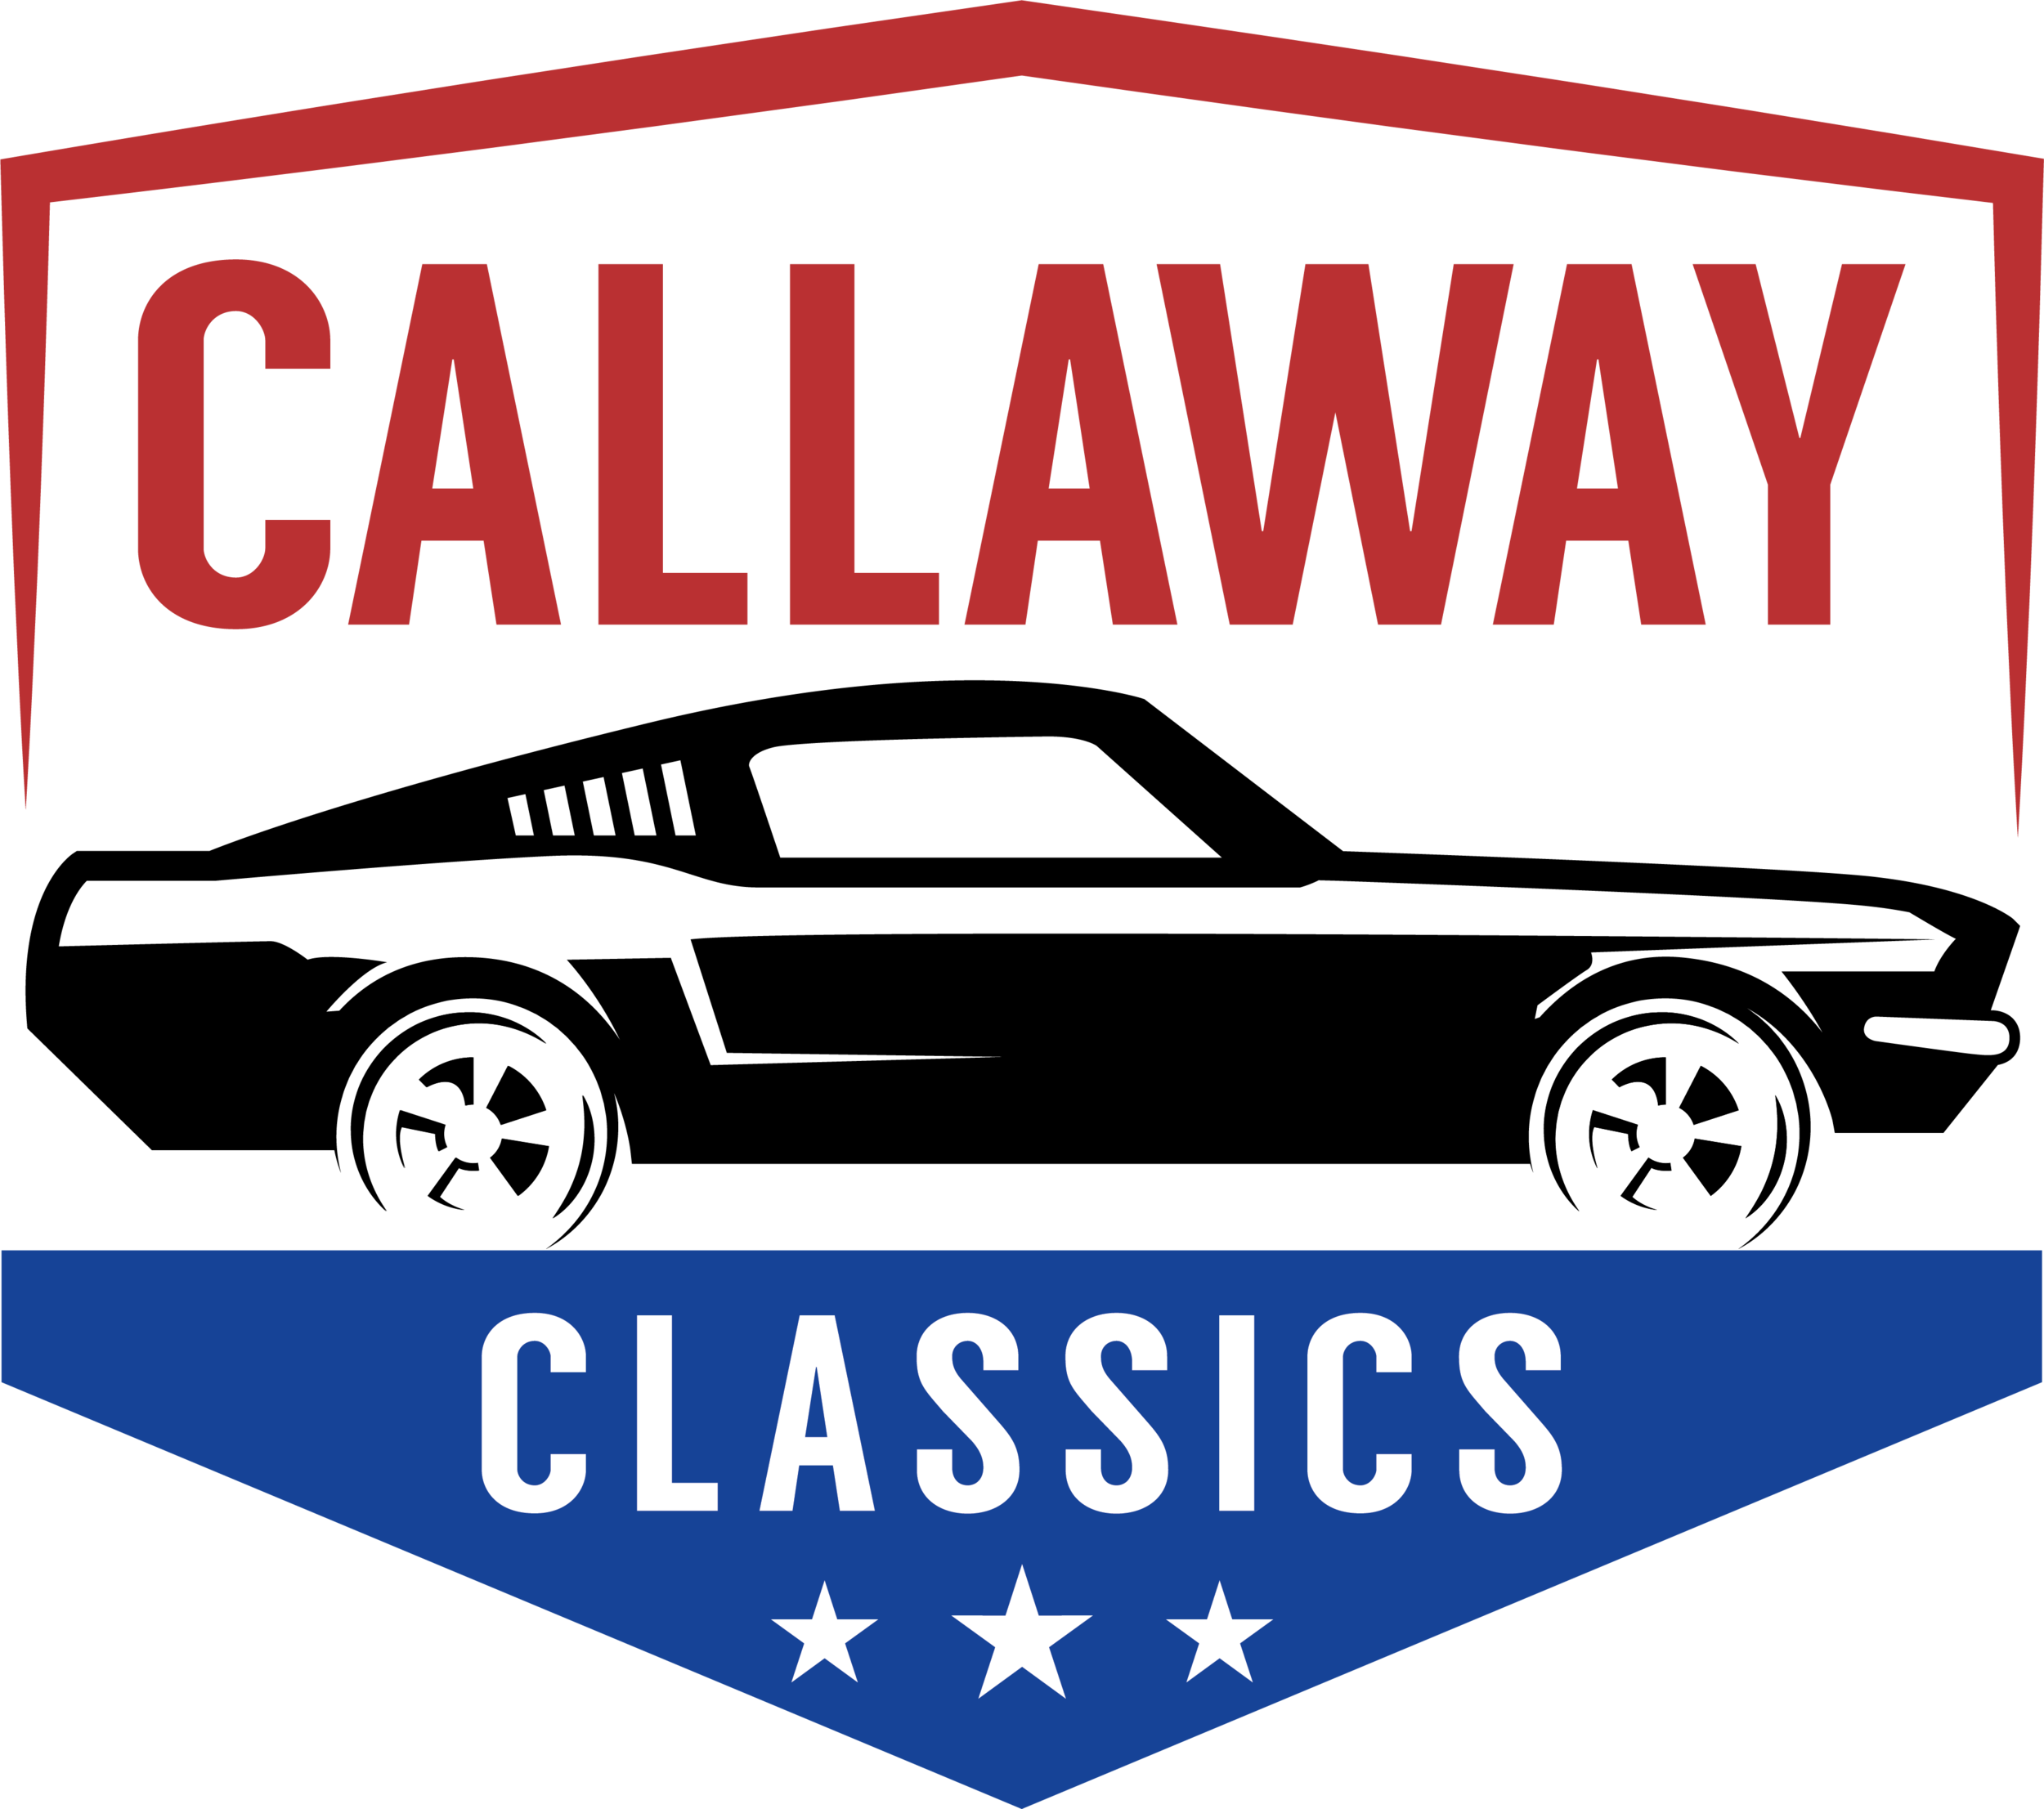 Callaway Classics - Classic Cars and Trucks For Sale